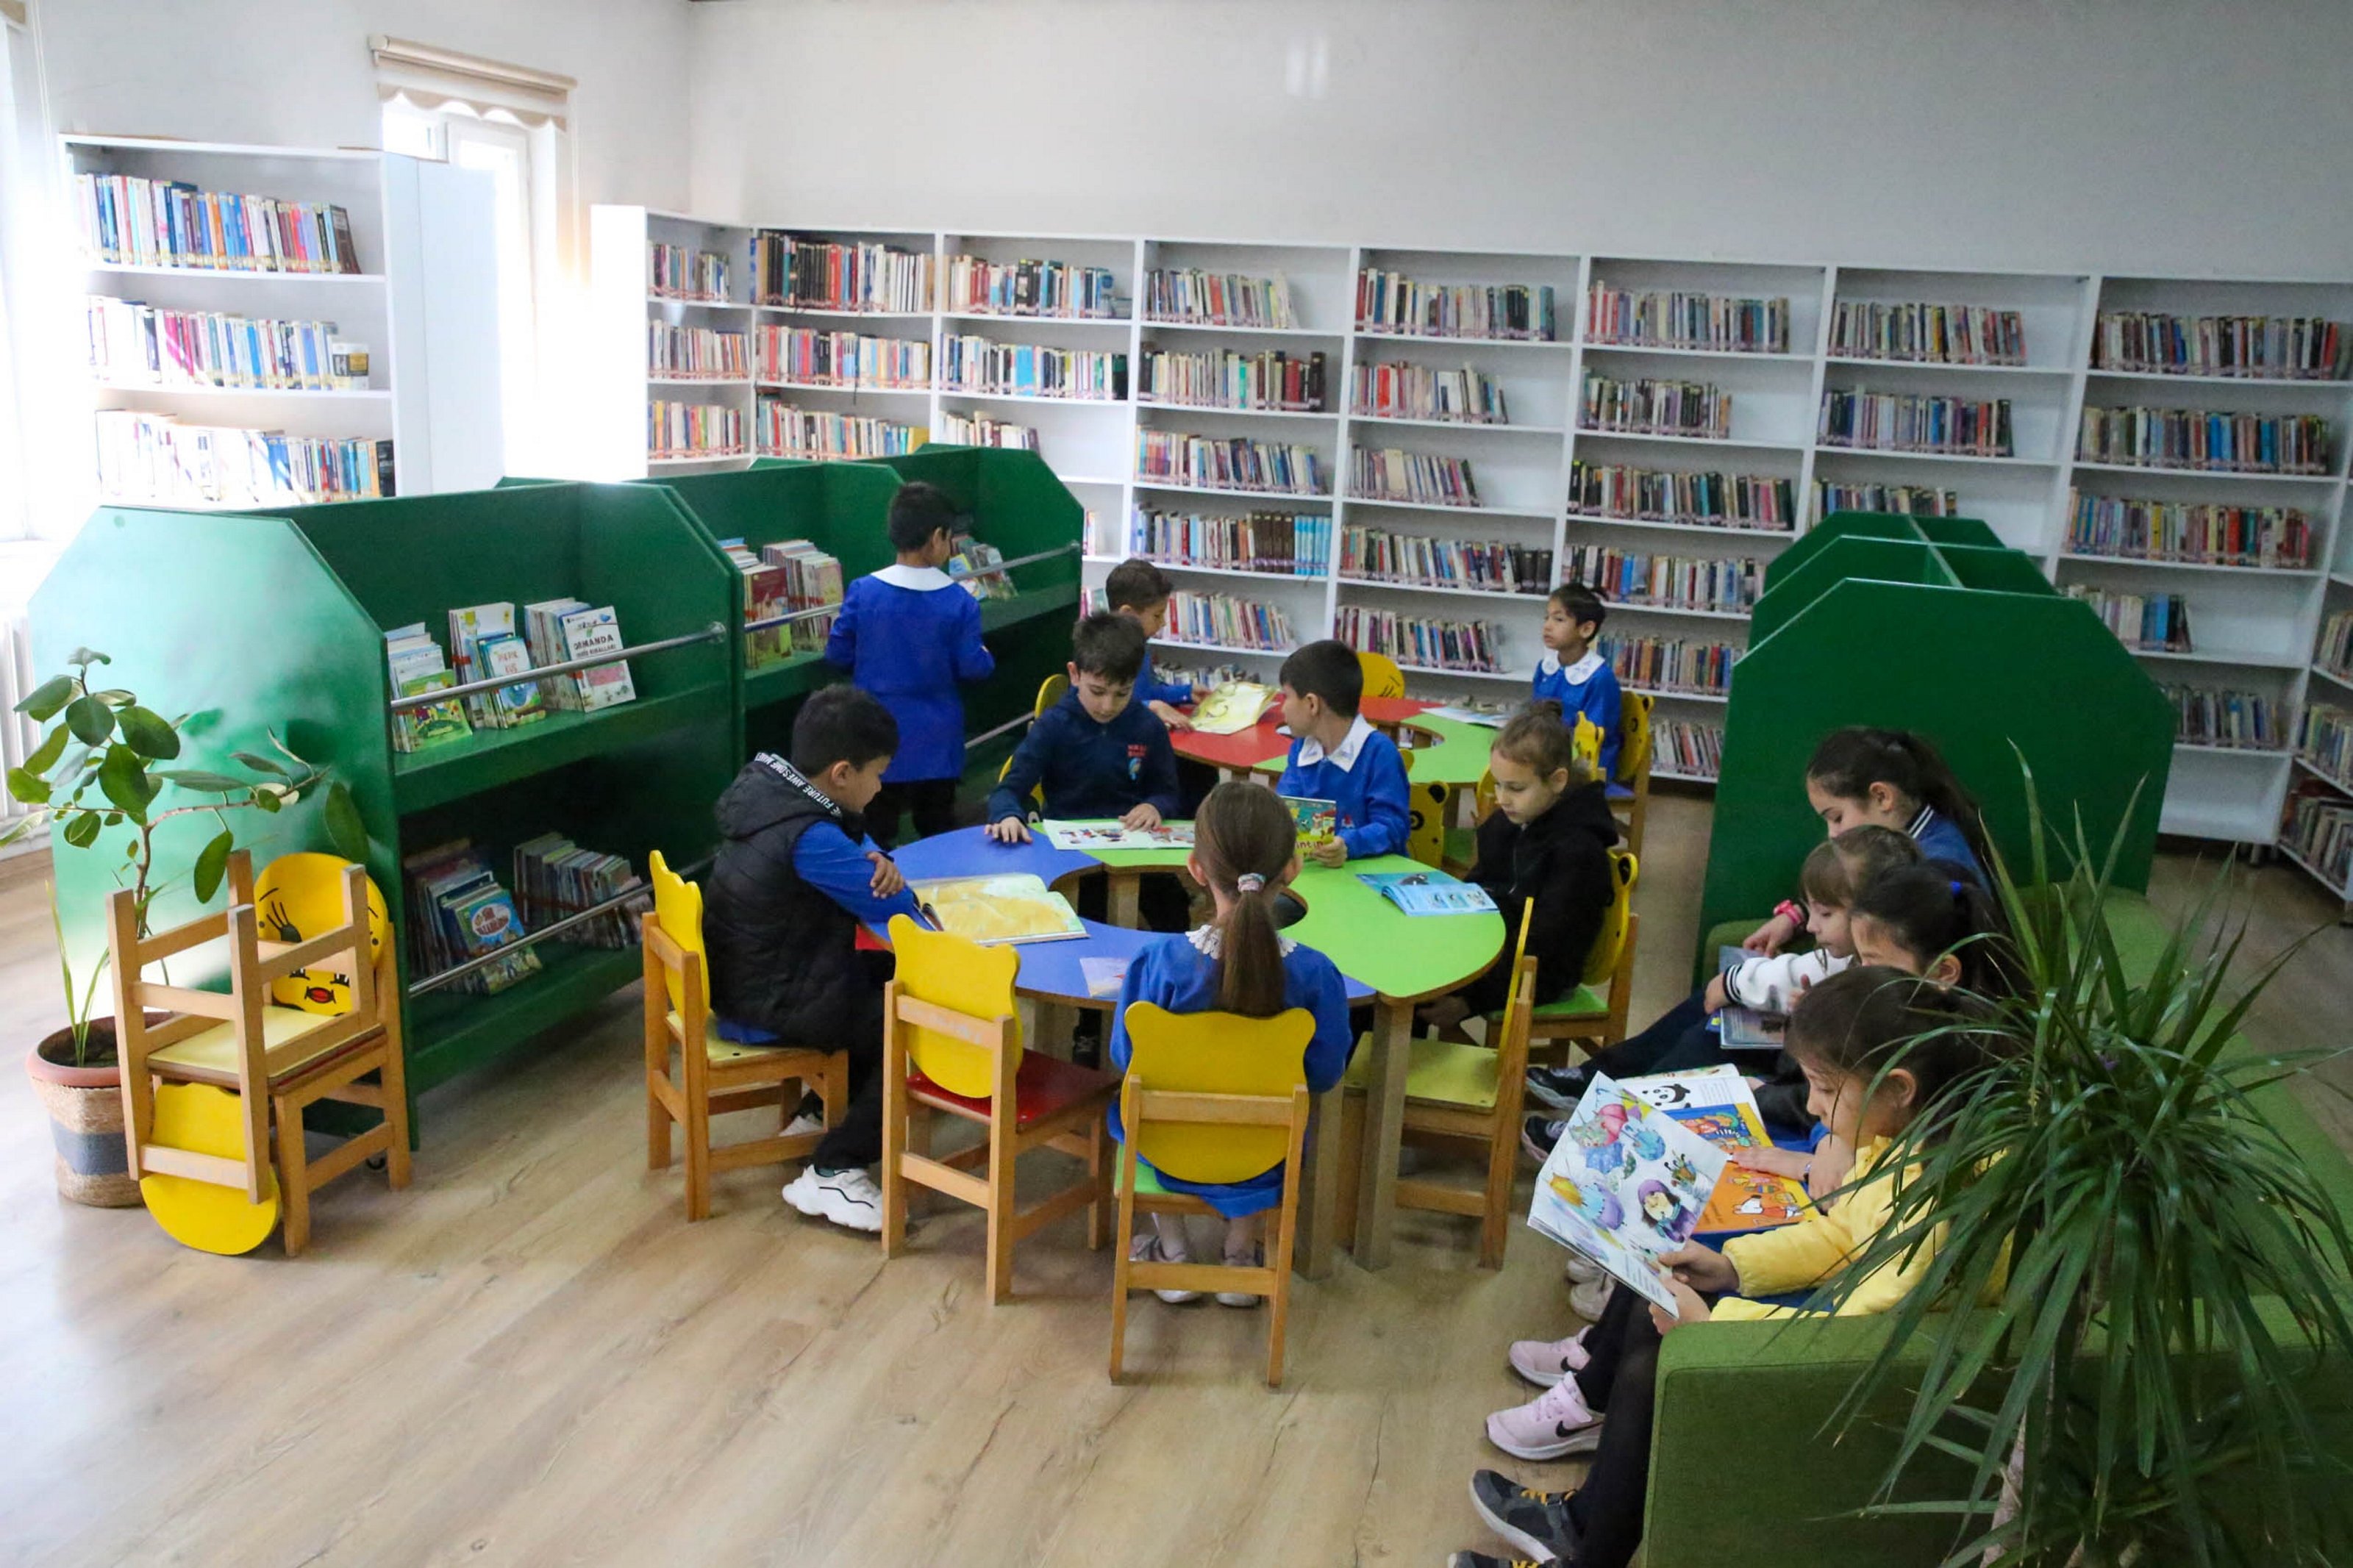 Türkiye’s ‘agro-library’ ranks in top 5 for Green Library Award